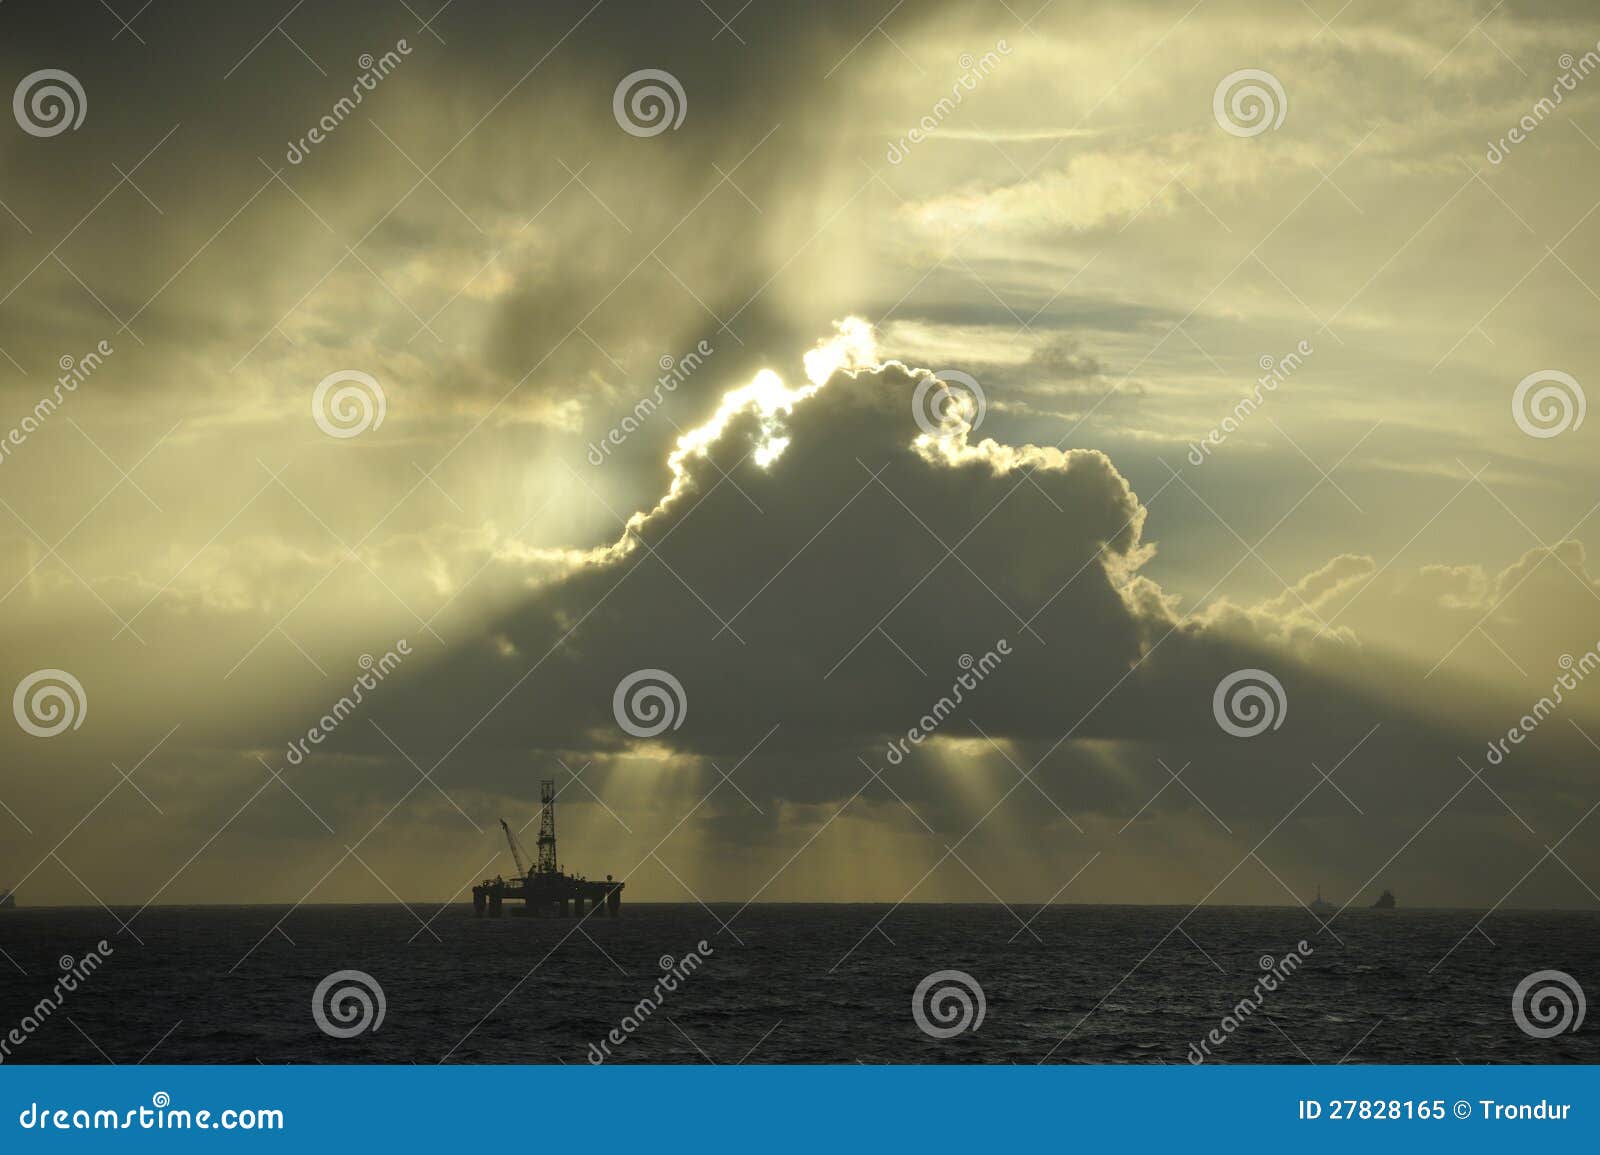 sun light beams over oil platform